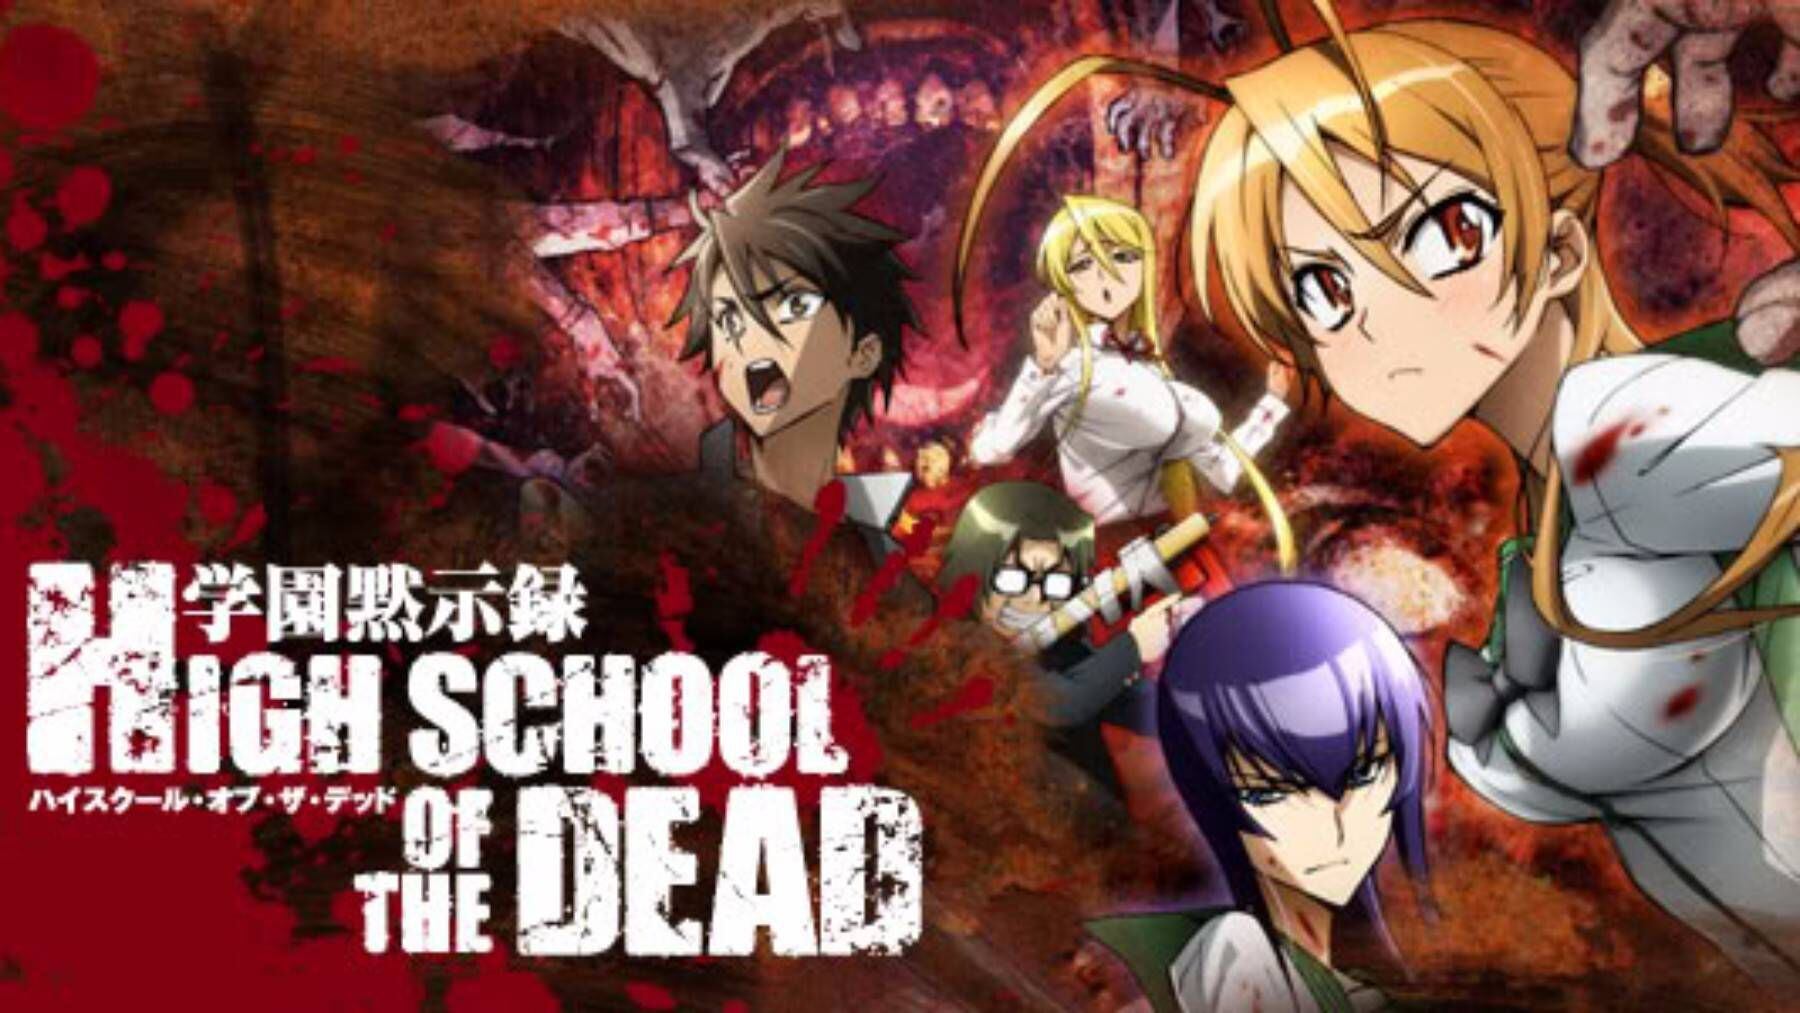 Highschool of the Dead: Zombis y fanservice disponibles en Netflix